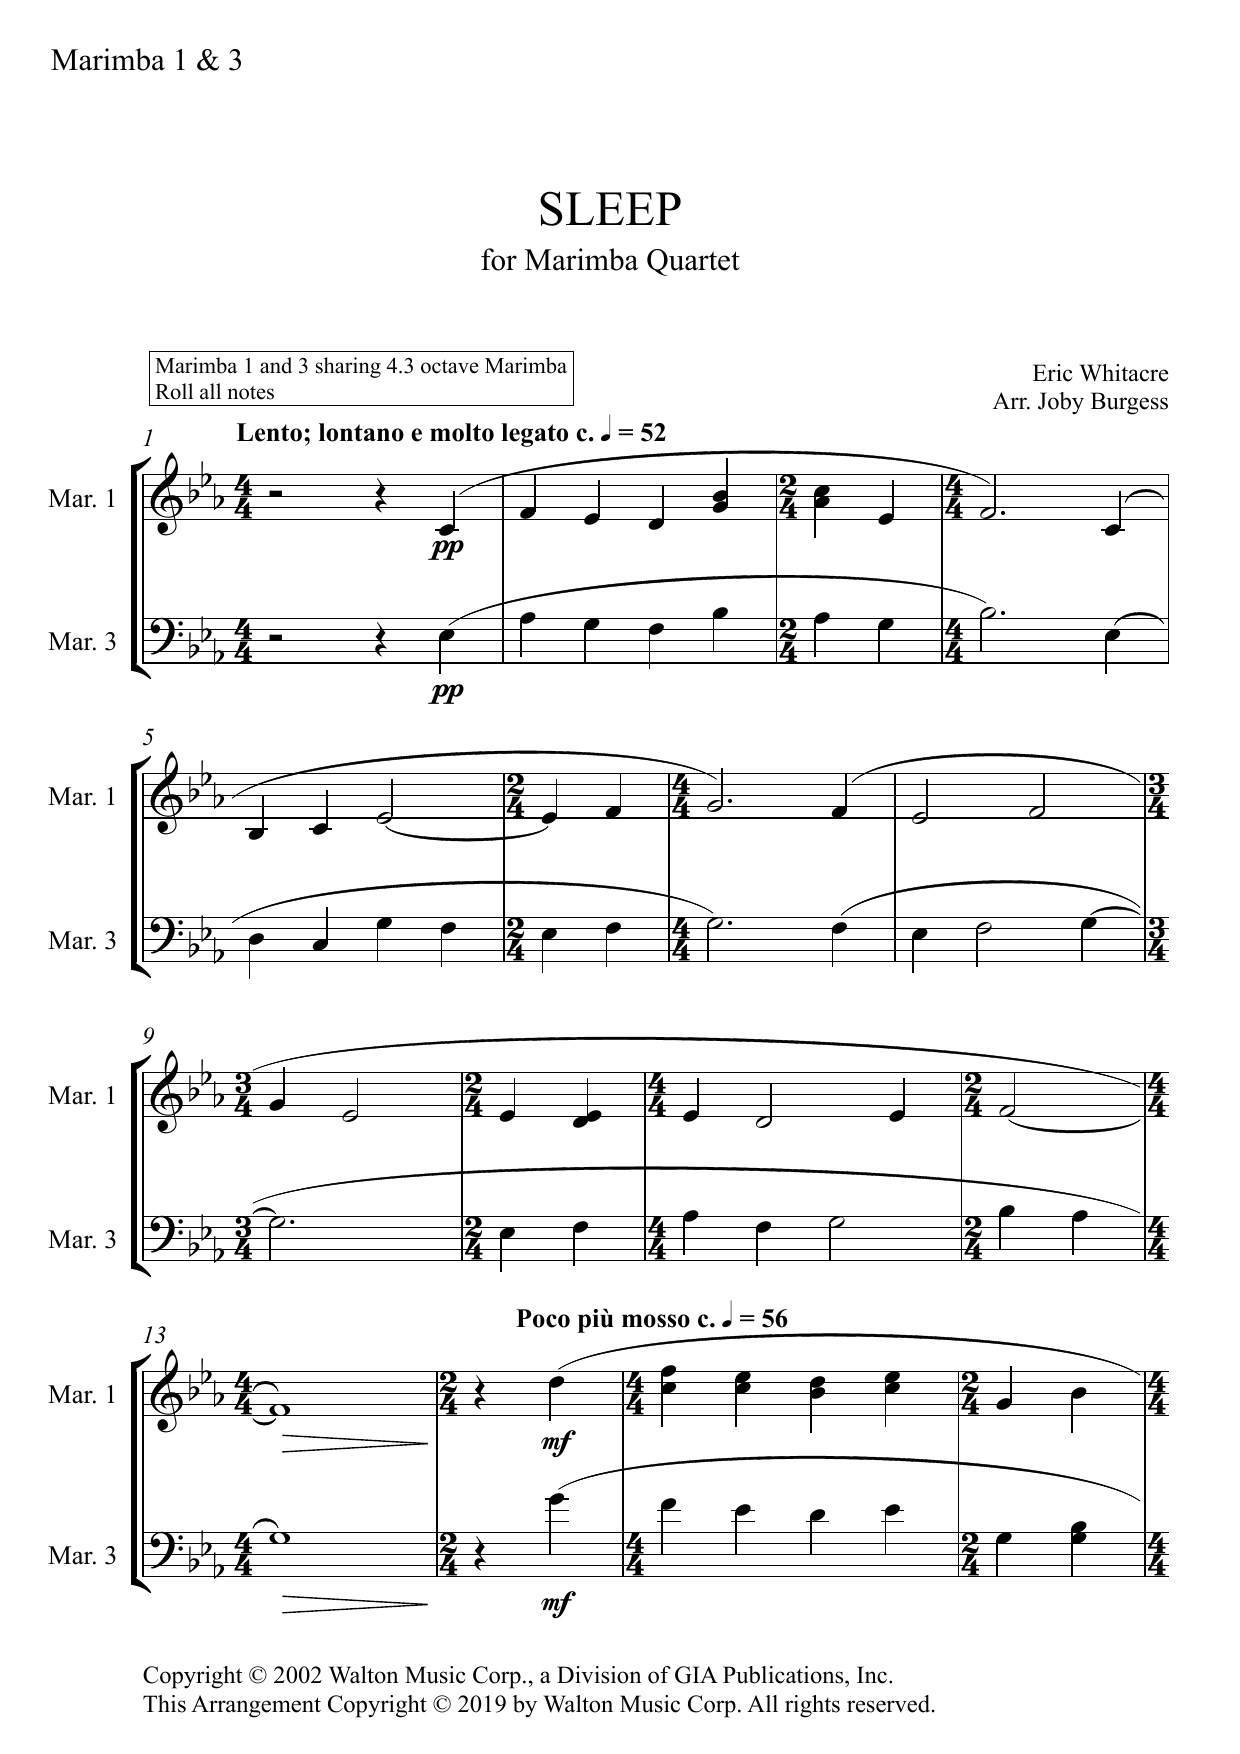 Eric Whitacre Sleep for Marimba Quartet (arr. Joby Burgess) - MARIMBA 1 & 3 Sheet Music Notes & Chords for Percussion Ensemble - Download or Print PDF